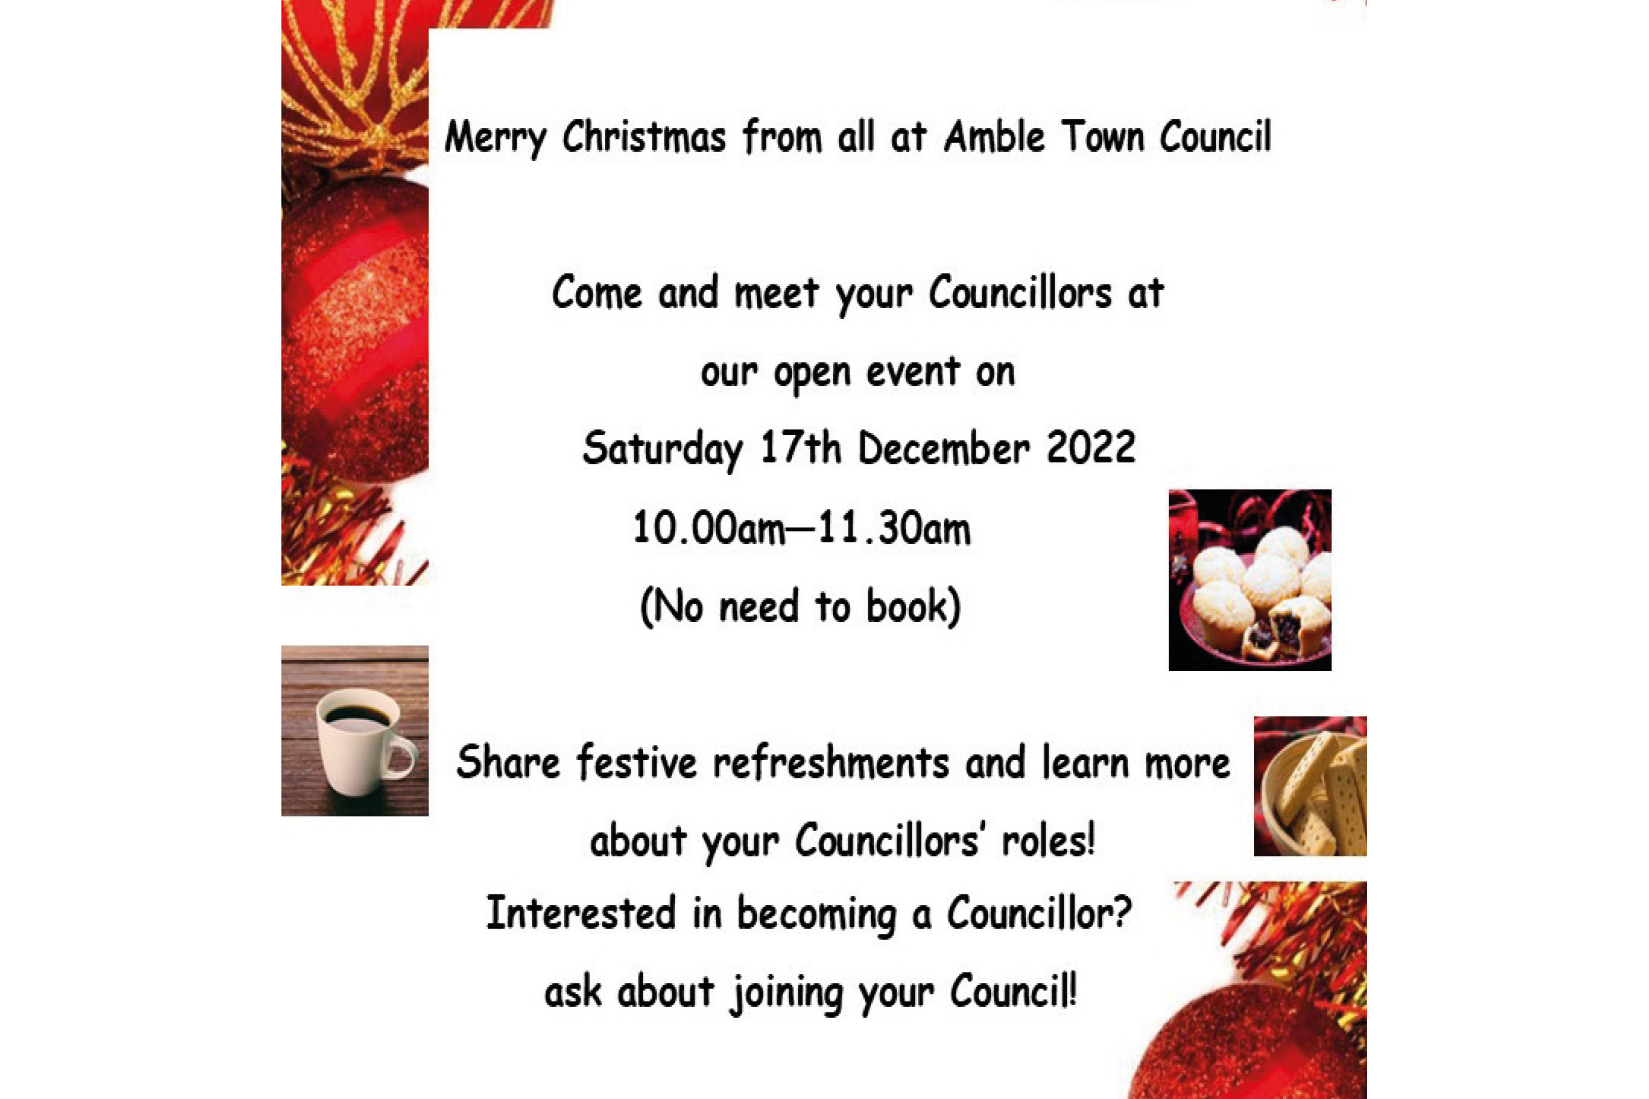 Public invitation to an open event at Amble Town Council 17 Dec 2022 10am-11.30am